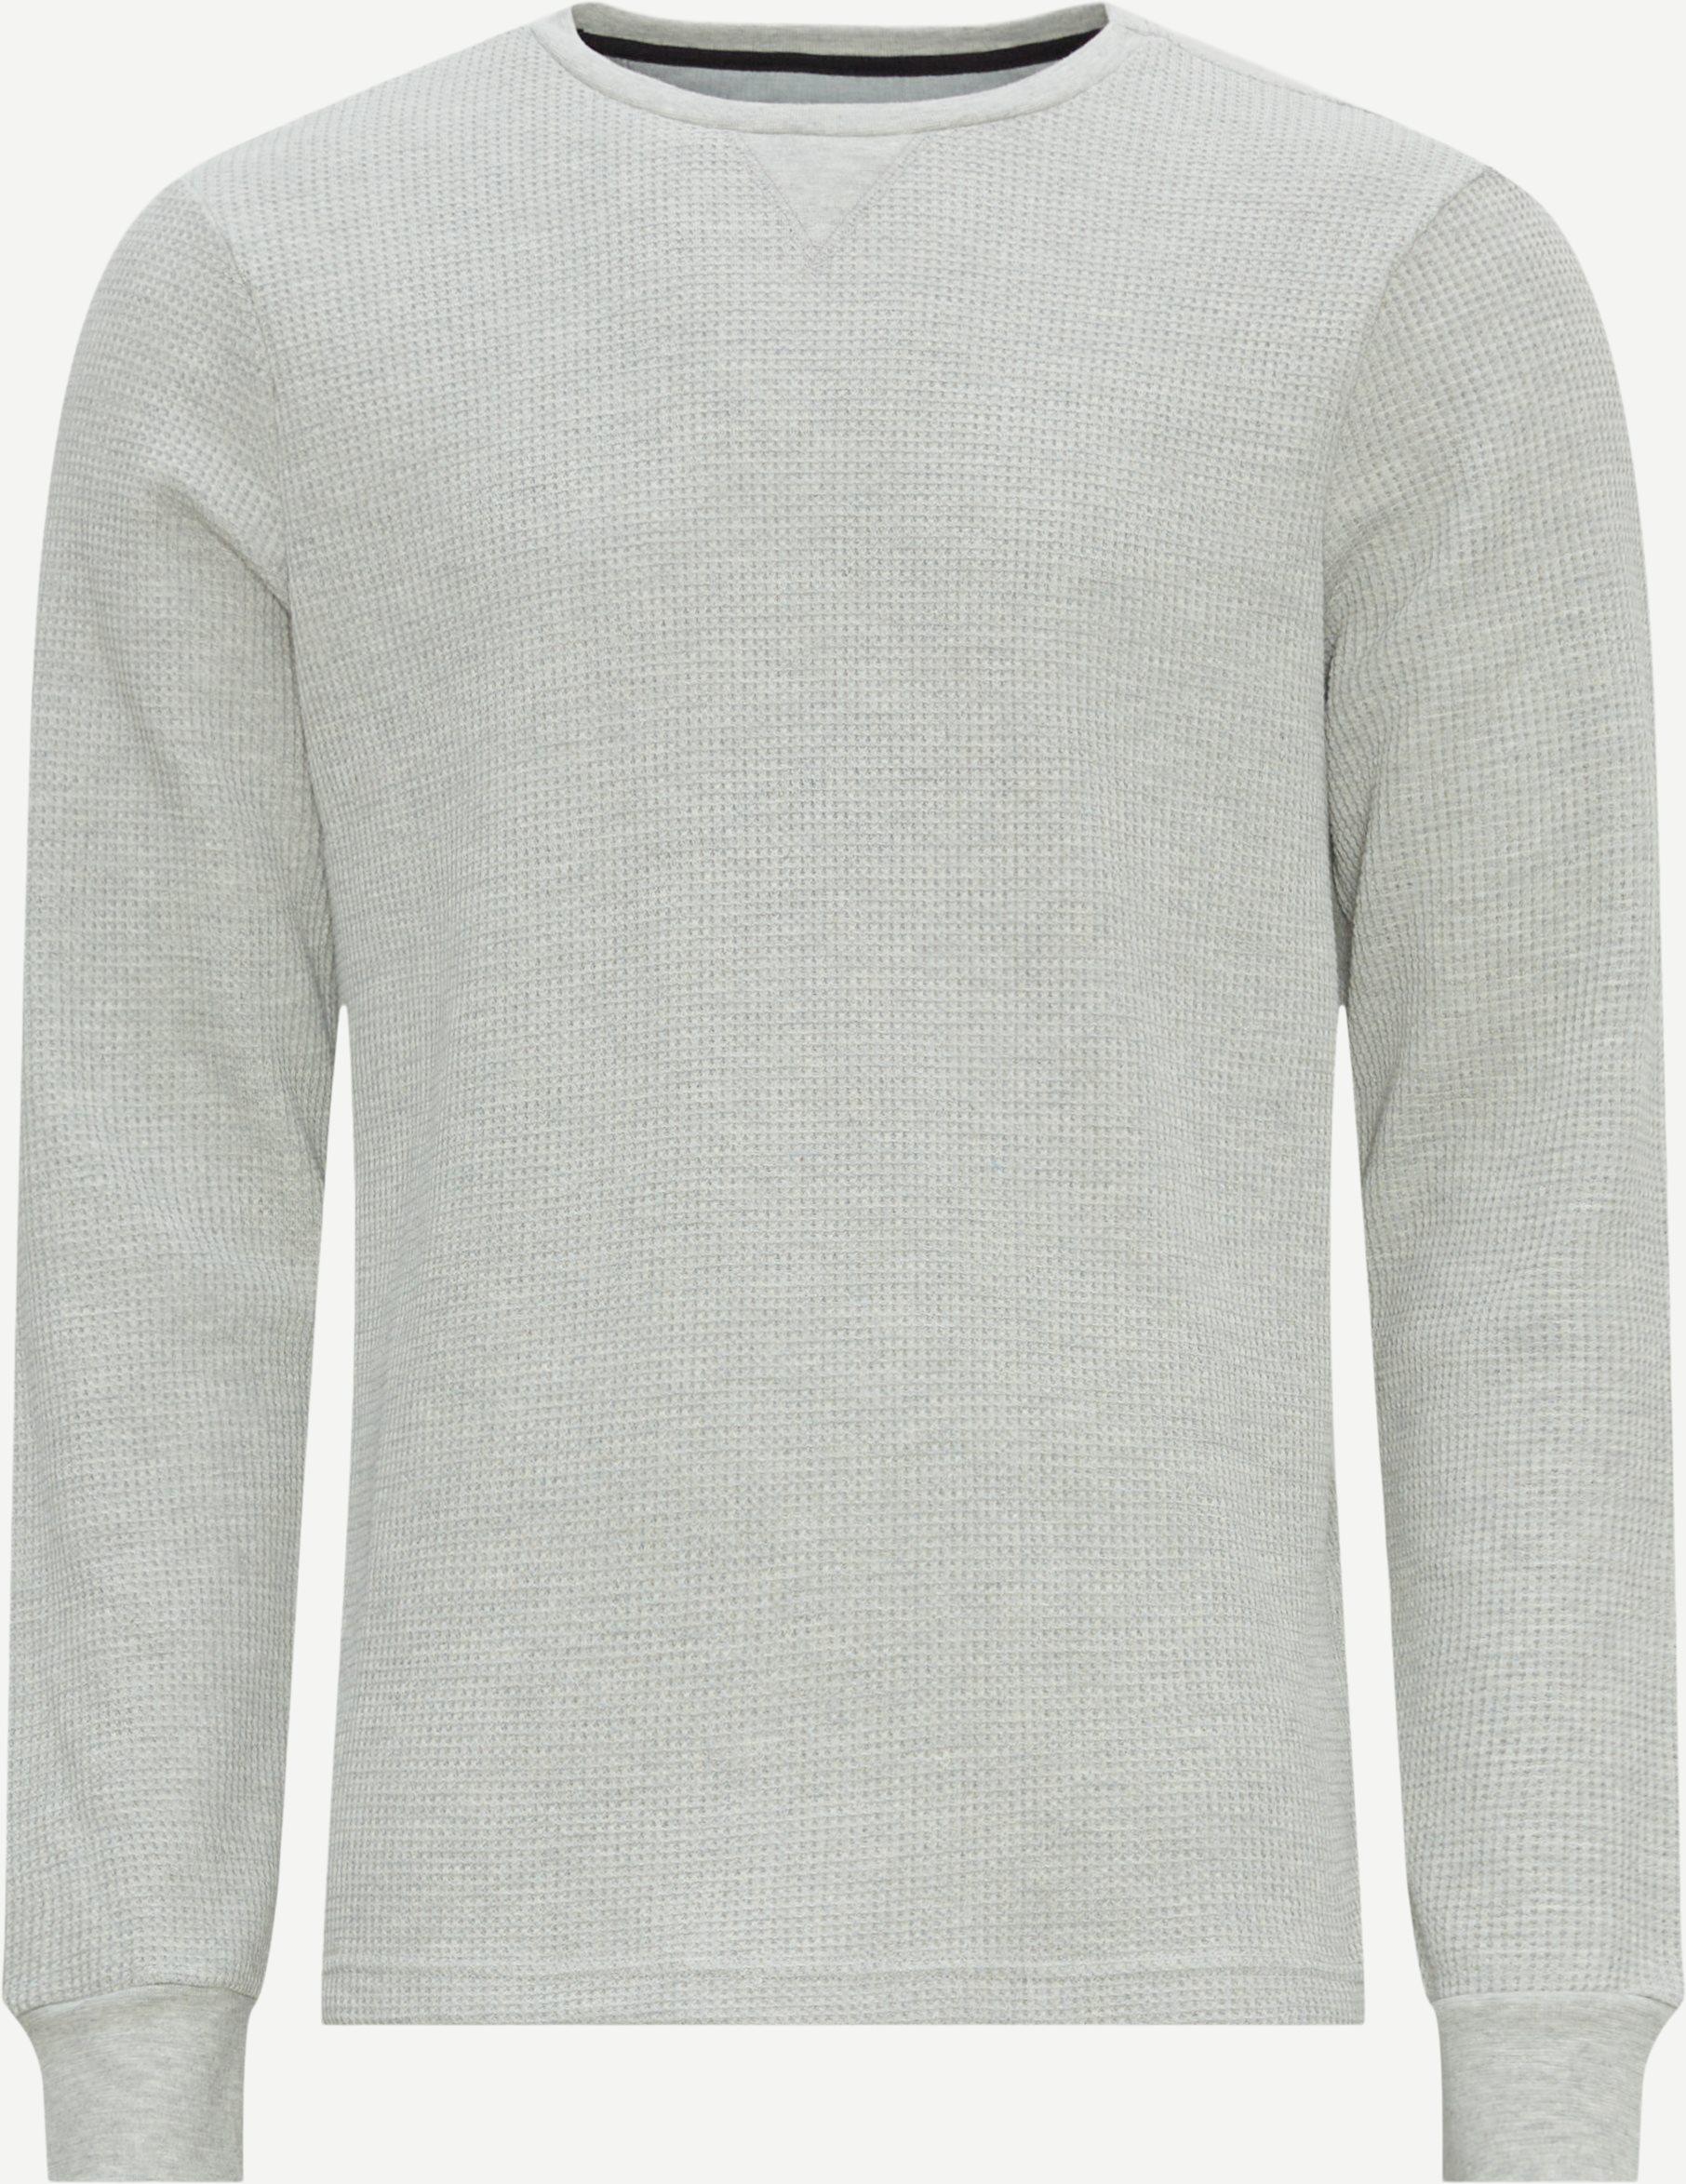 Coney Island Sweatshirts NAPOLI Grey